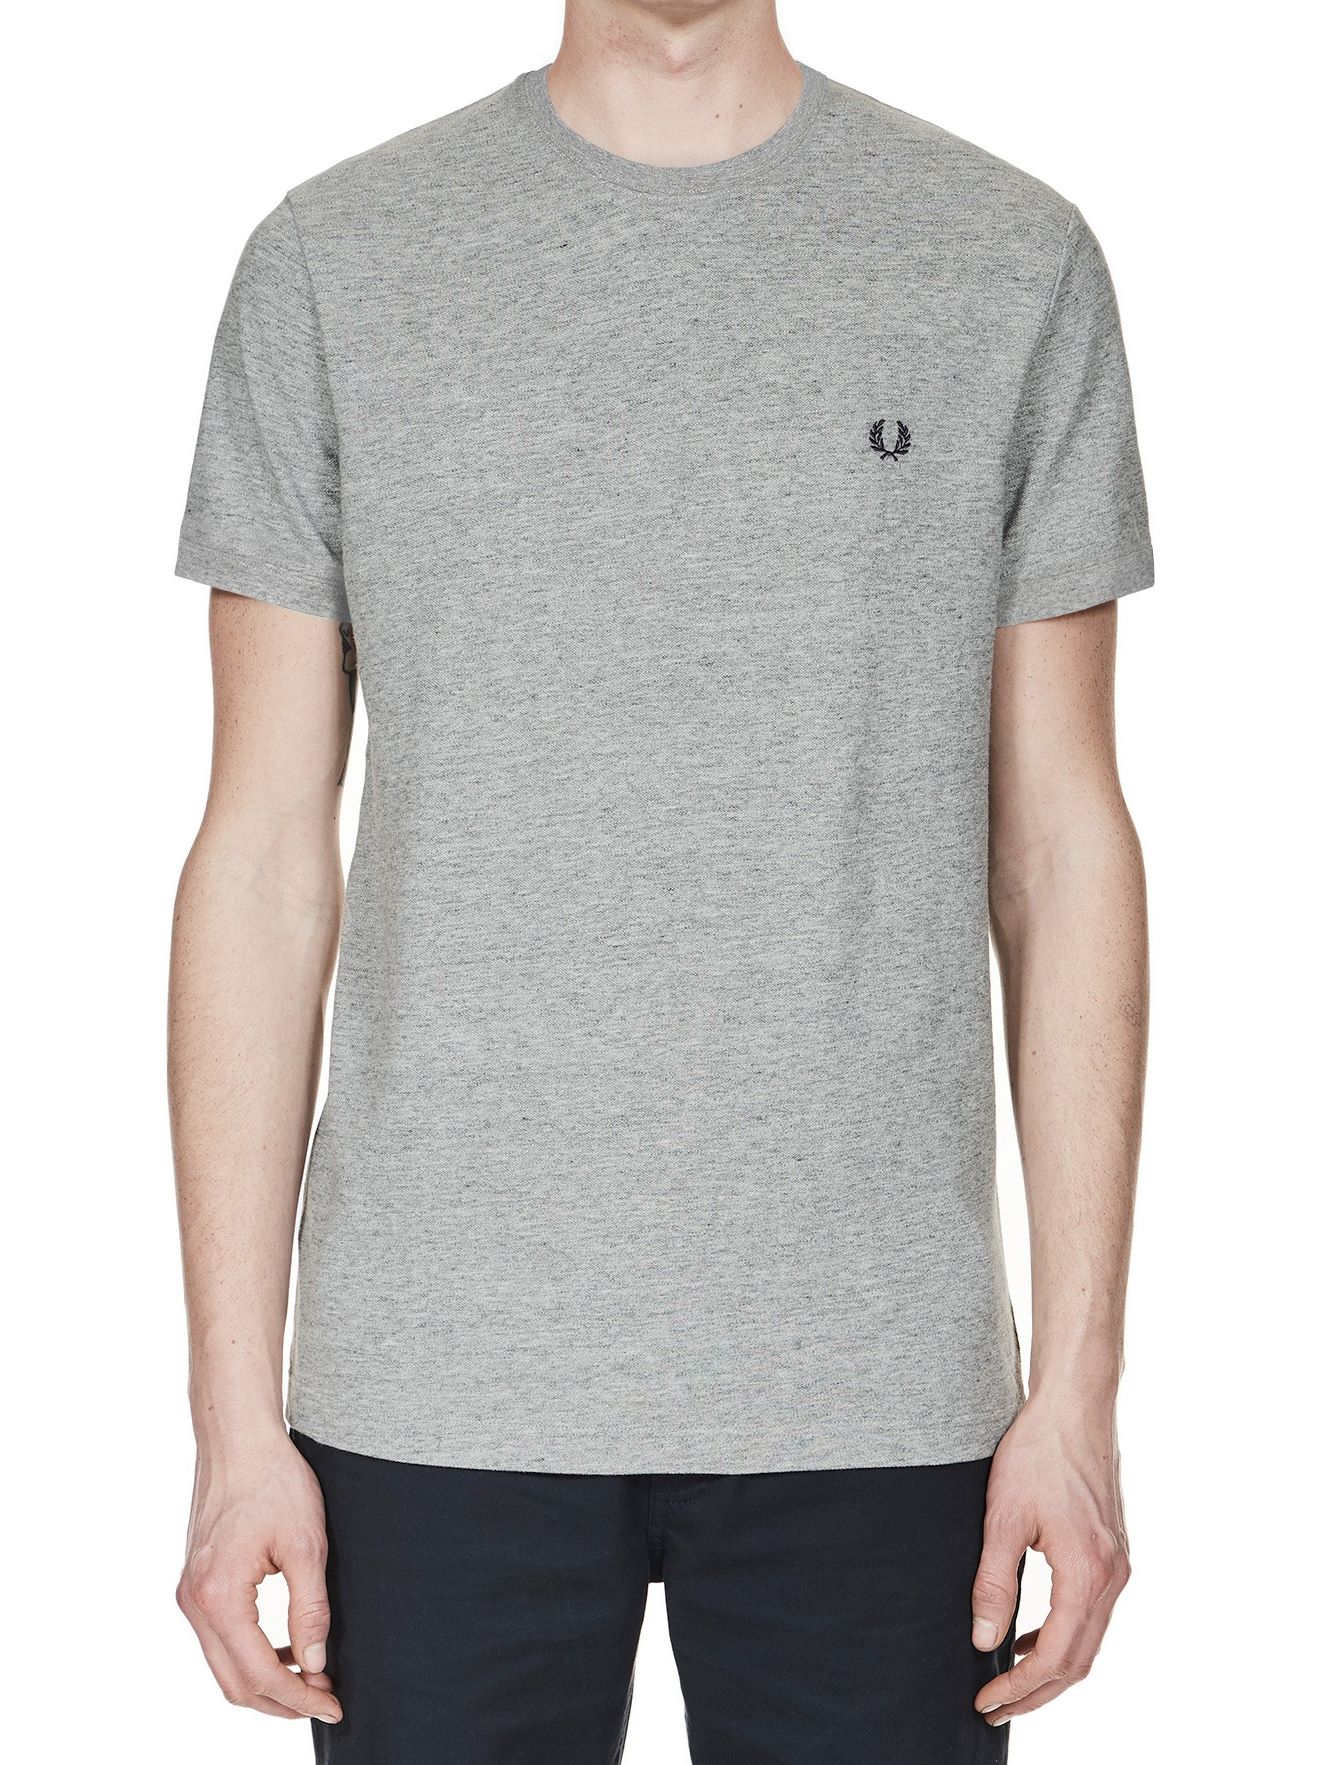 Fred Perry Plain Crew Small Logo T-Shirt in Grey | Dapper Street